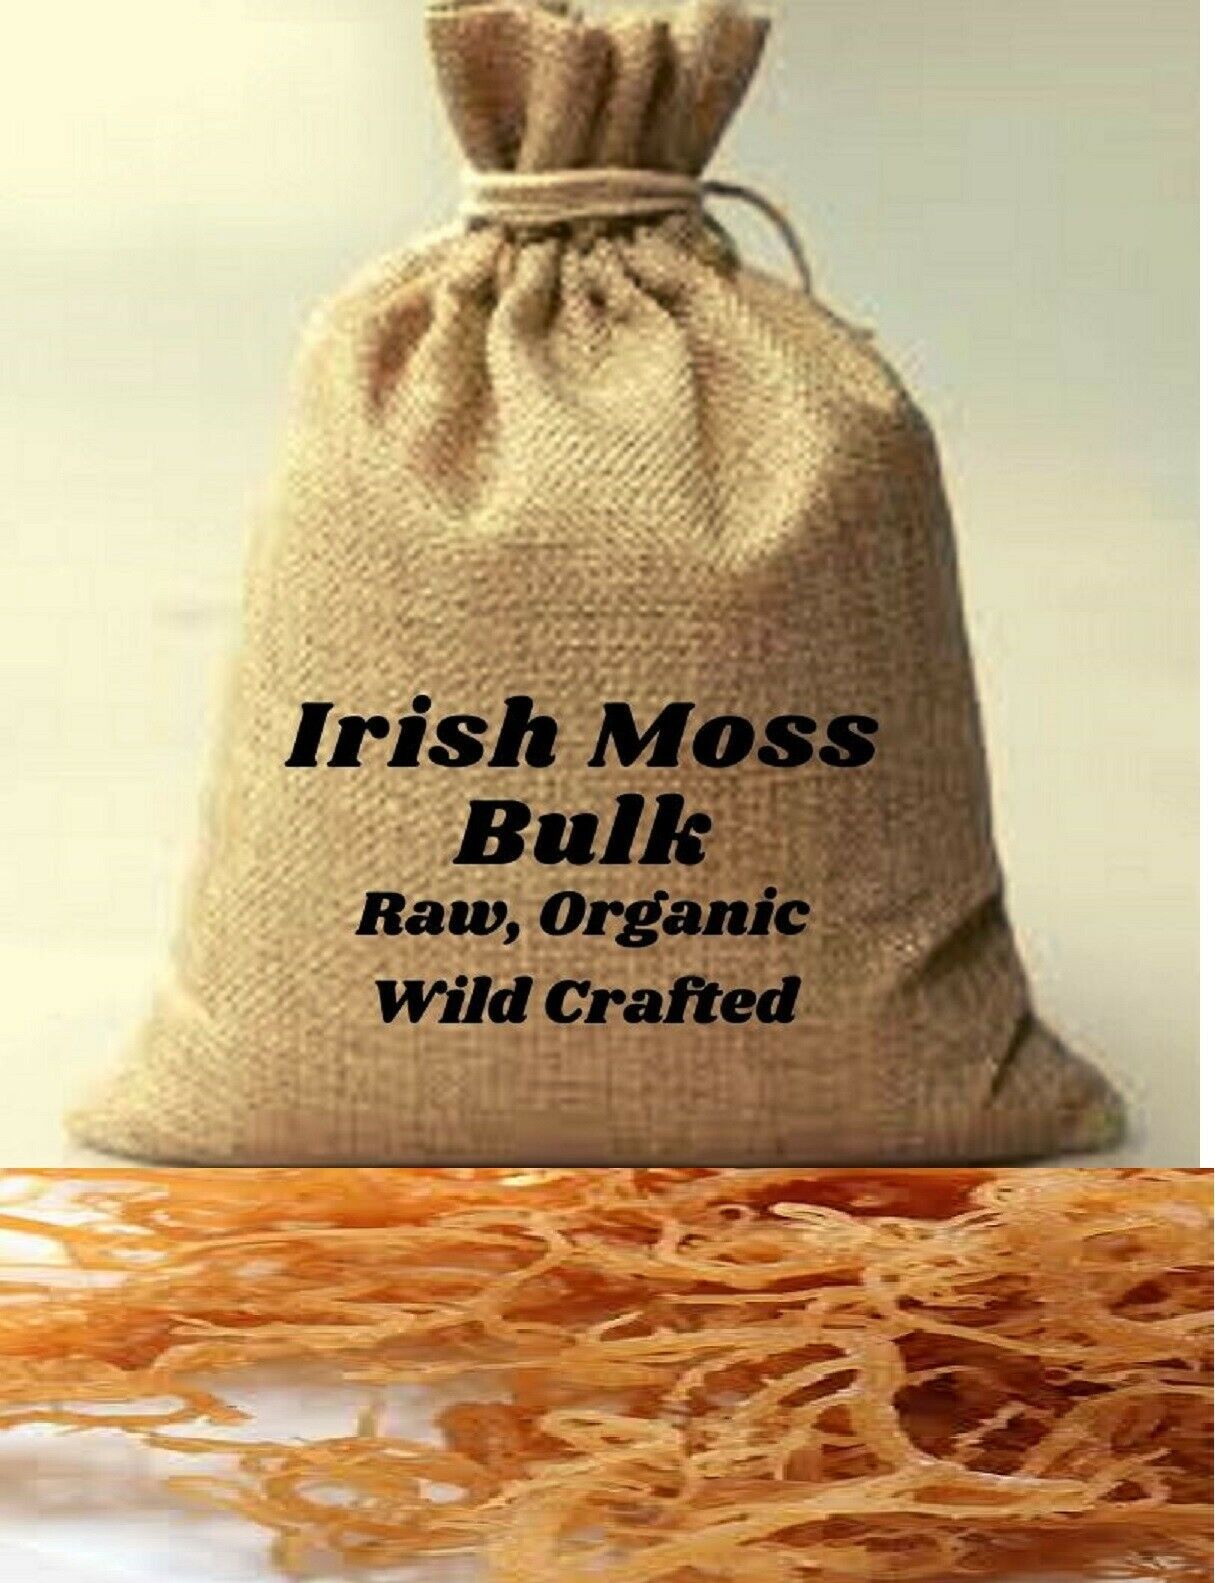 Whole Leaf Irish Moss Sea Moss + Bulk buy and Save $$ Wholesale Prices Free Ship